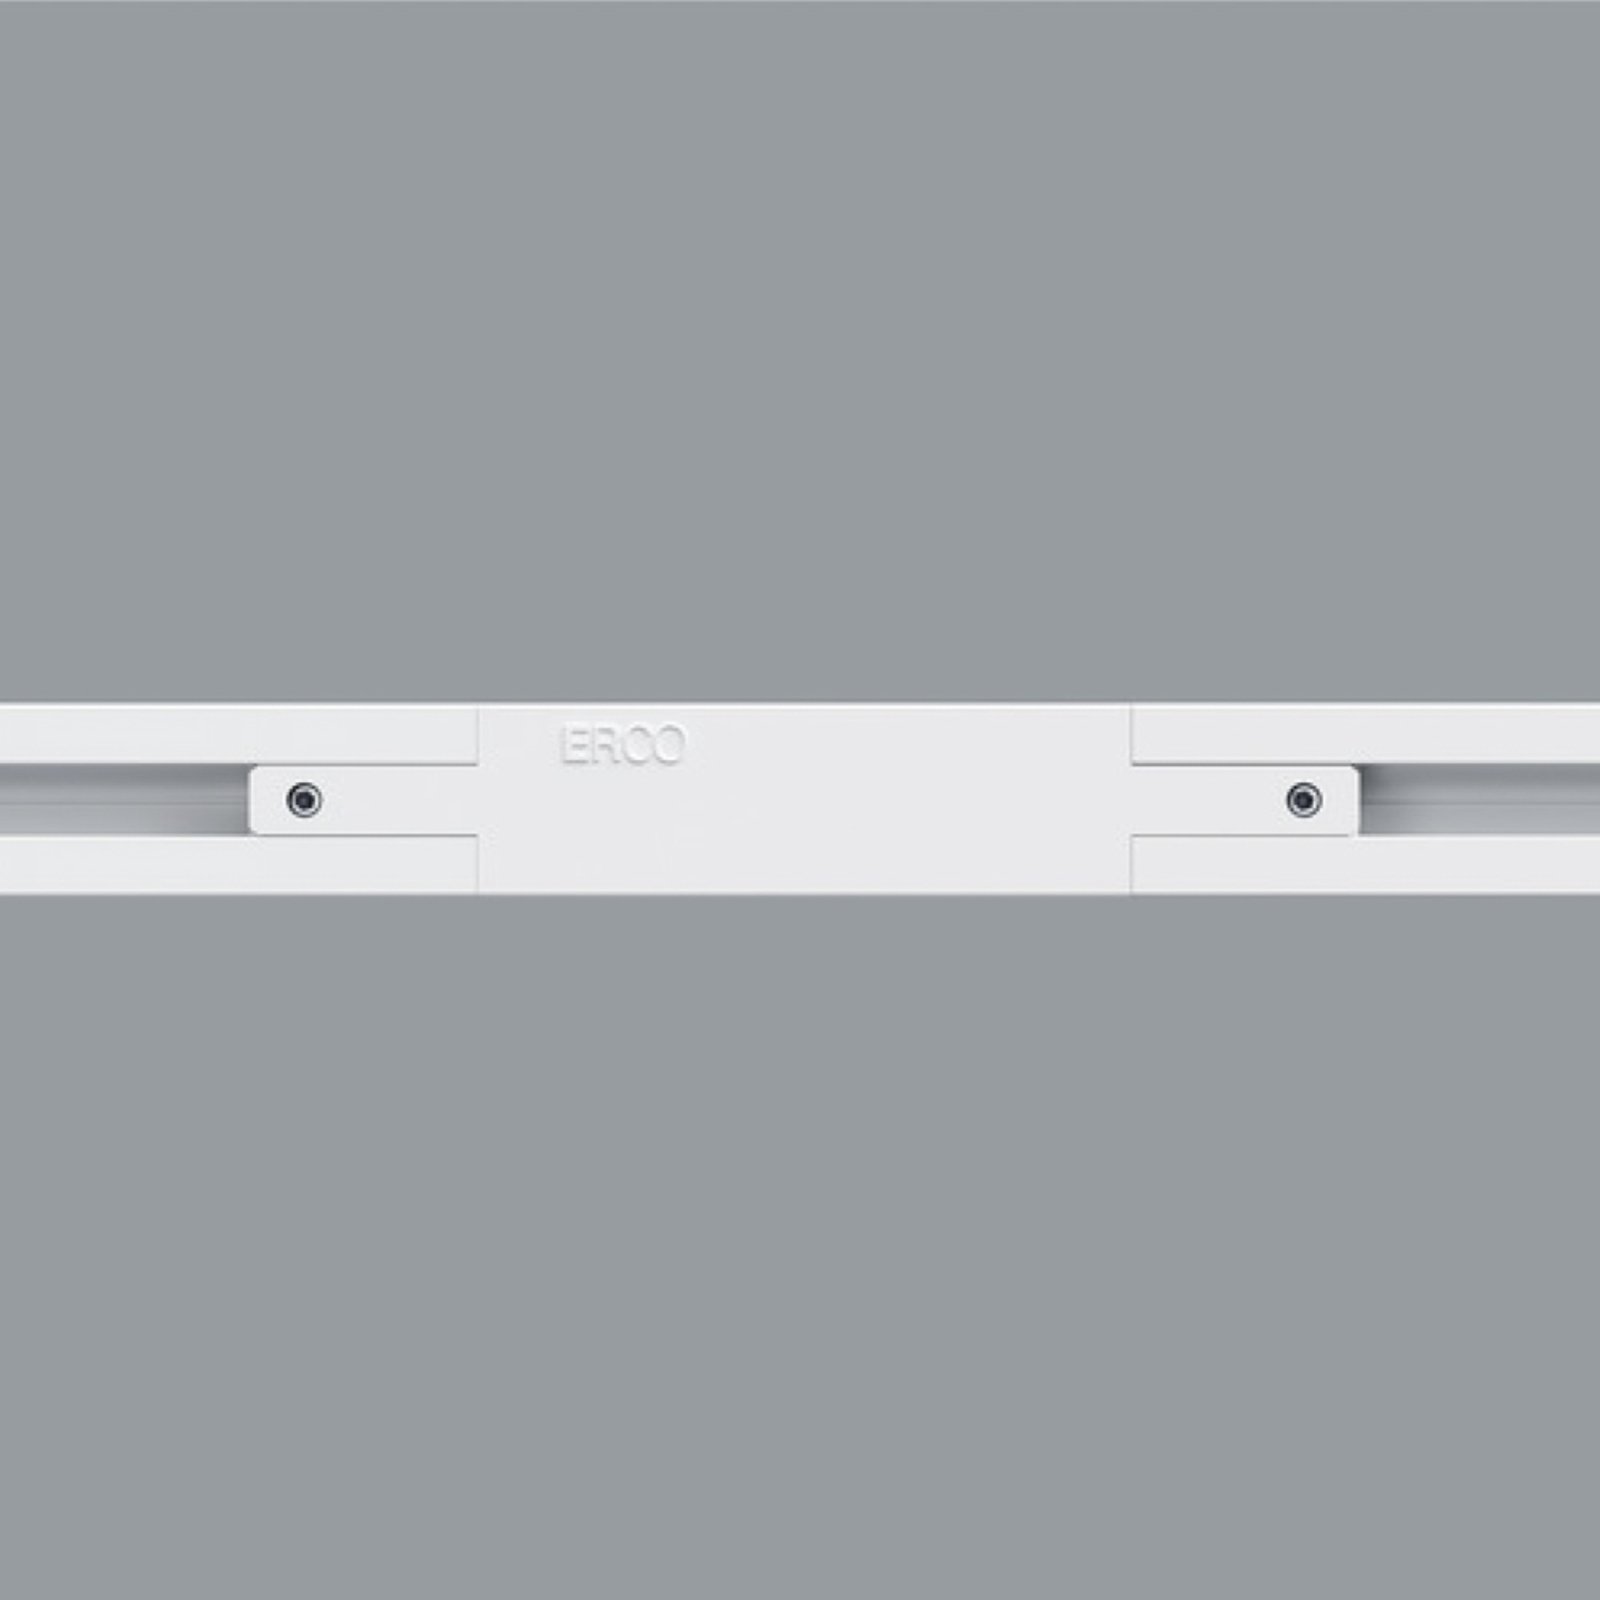 ERCO conector longitudinal de riel Minirail blanco